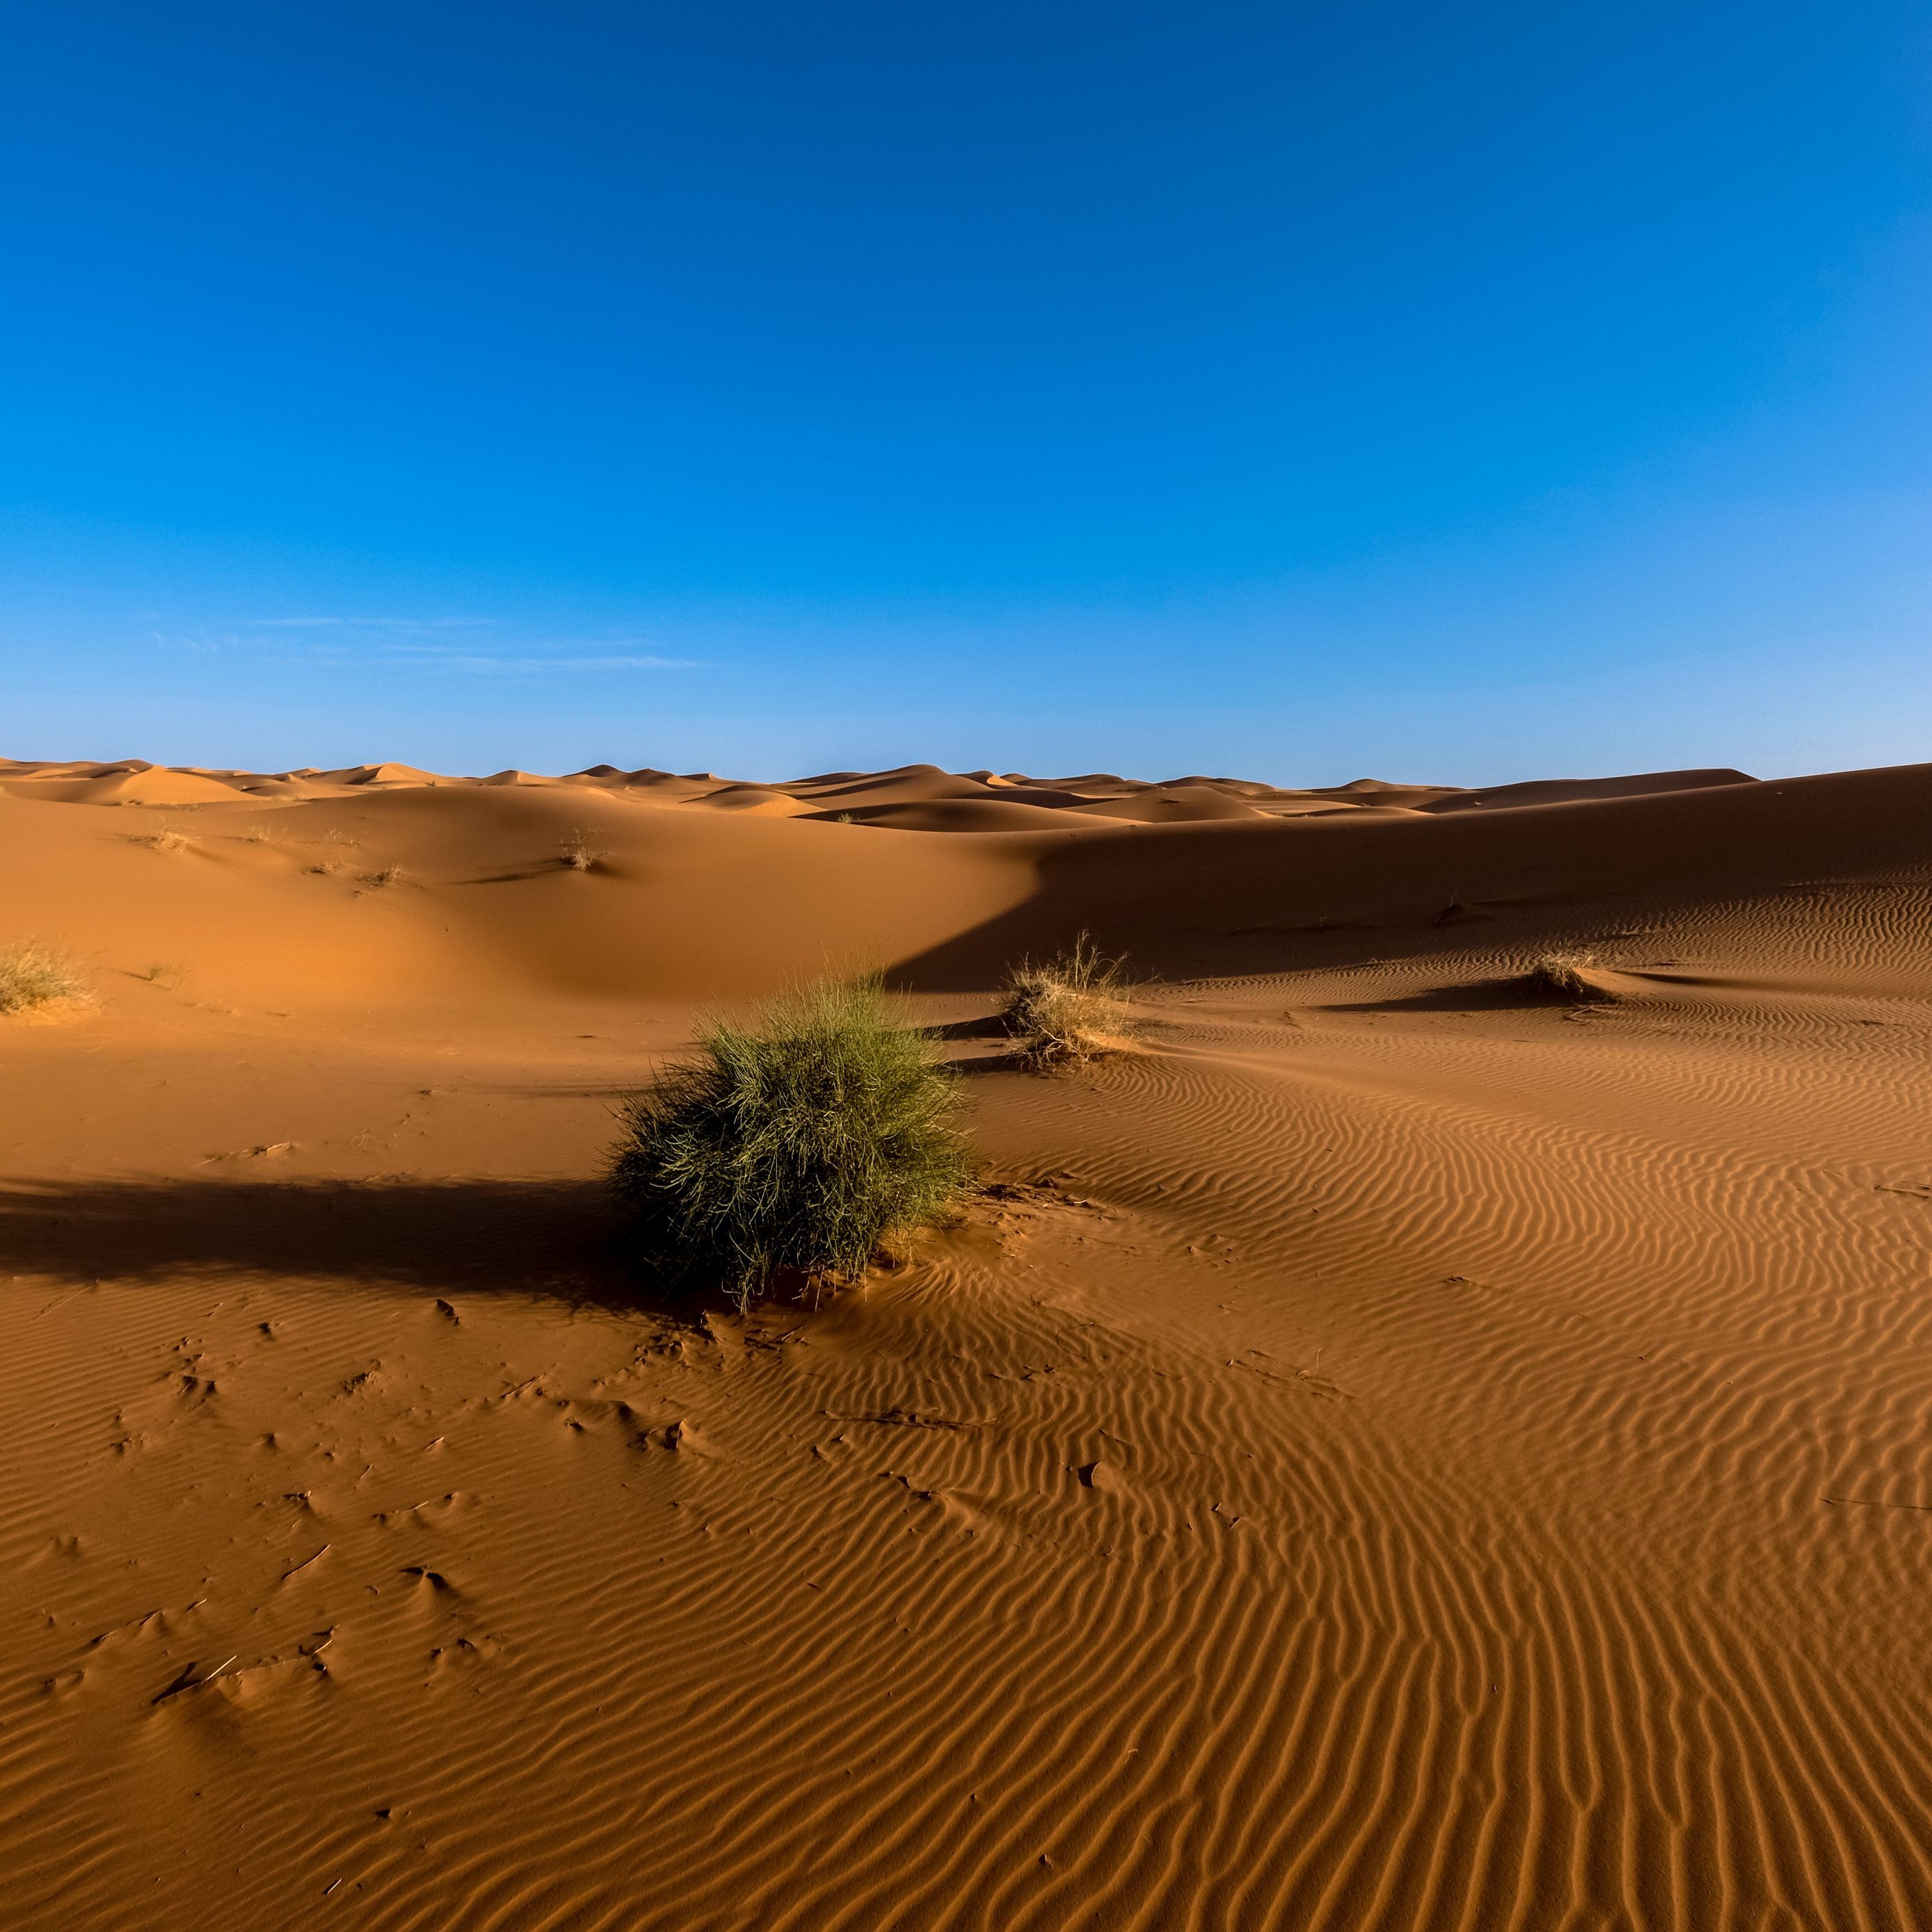 Download wallpaper 2780x2780 sahara, desert, sand, sky ipad air